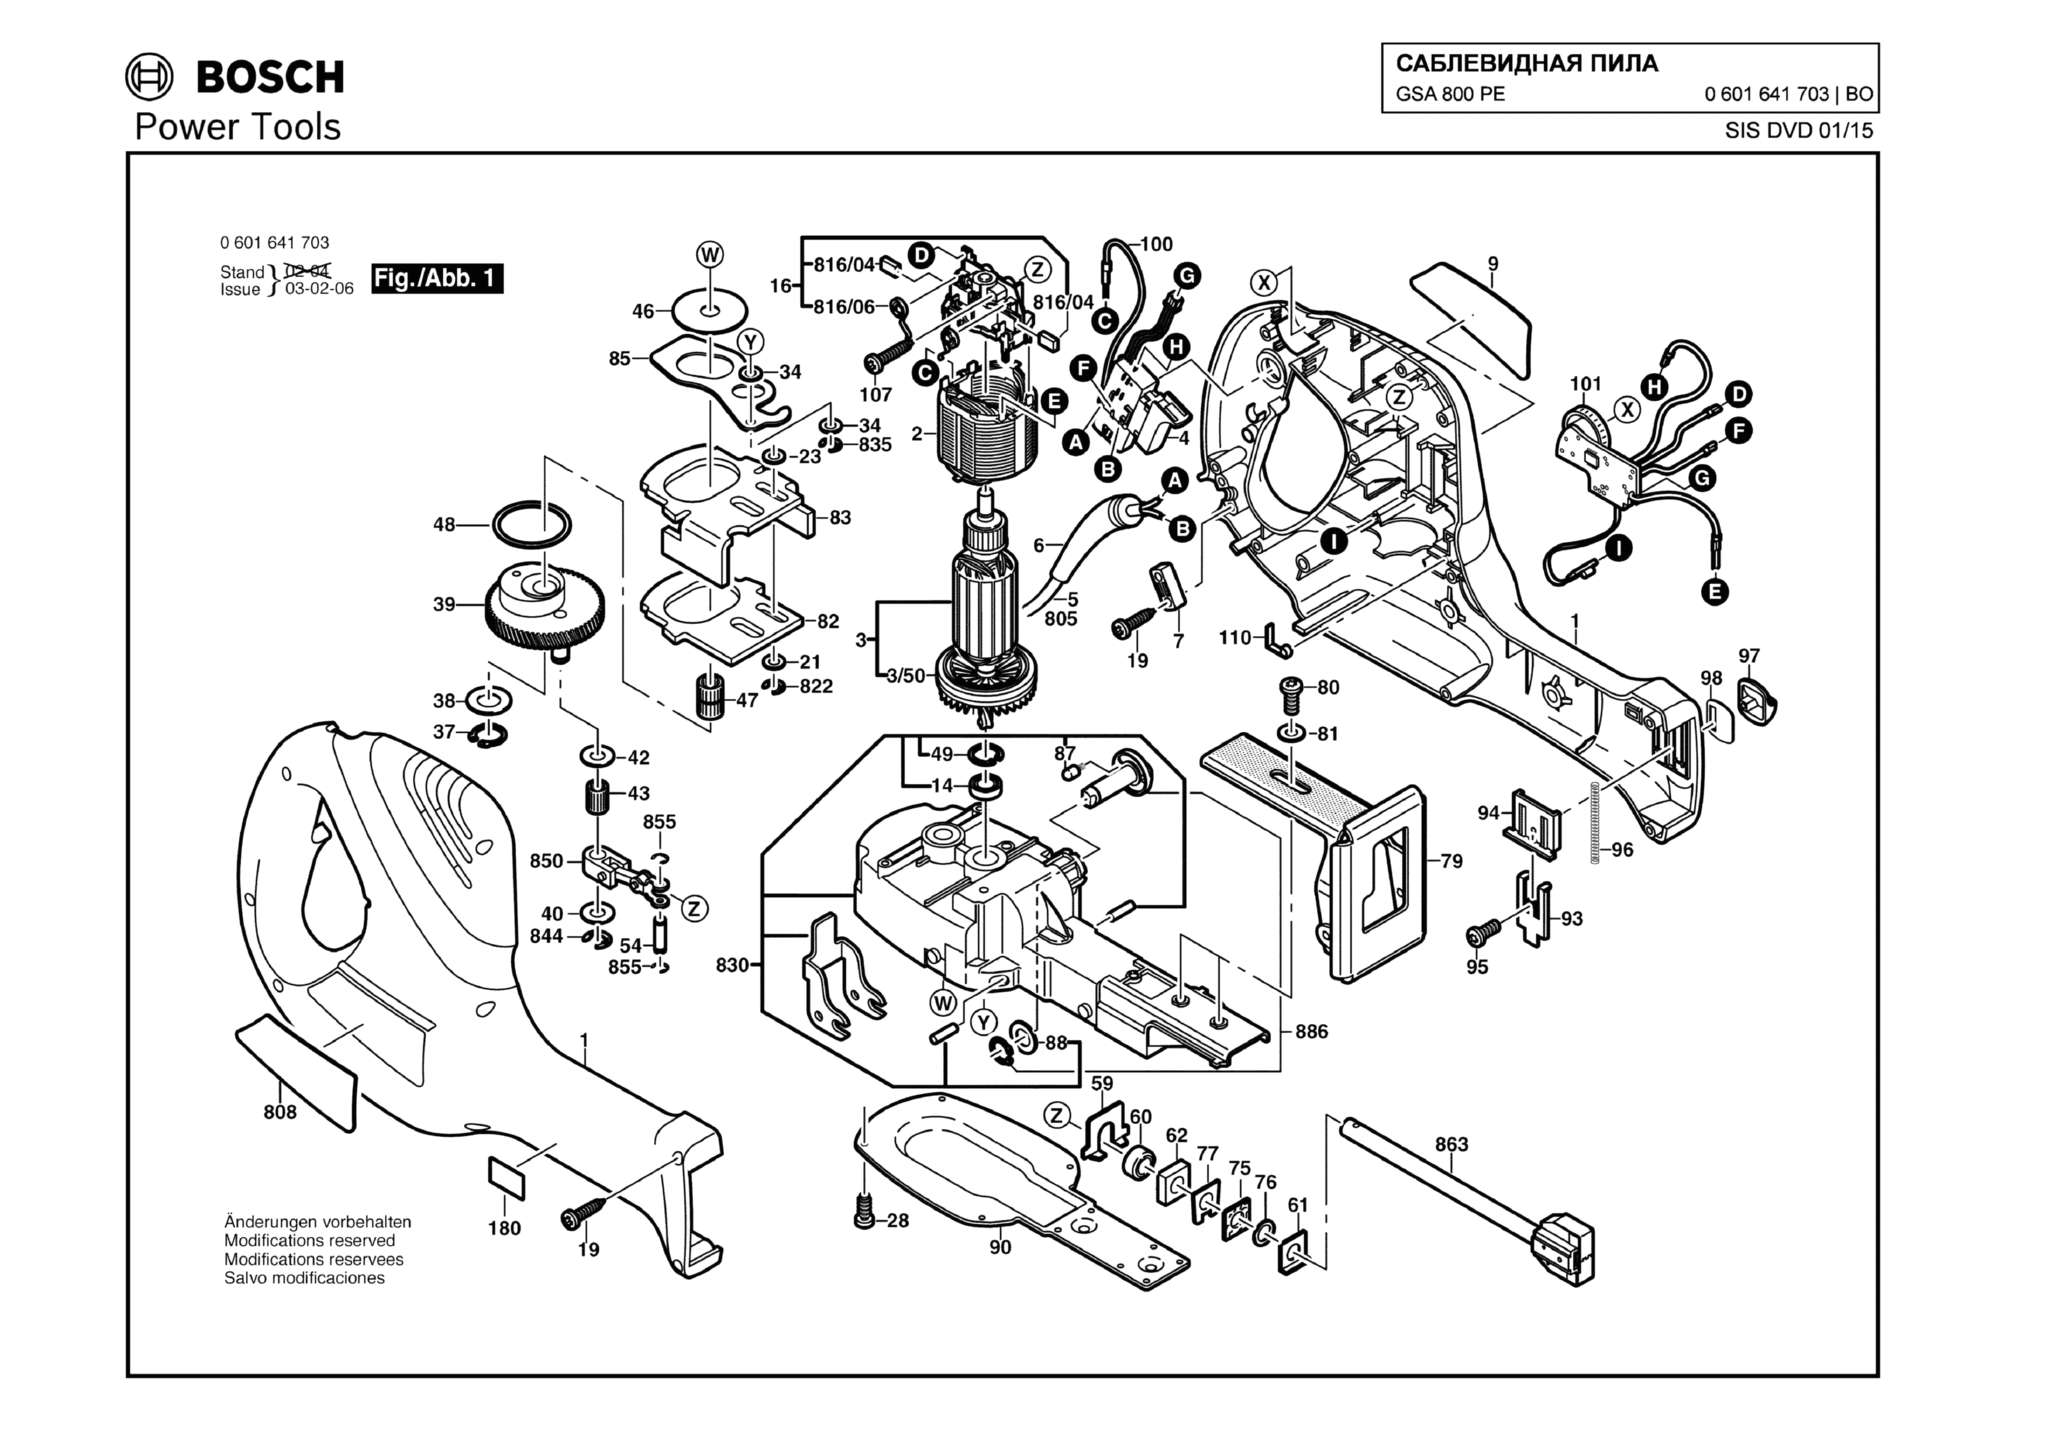 Запчасти, схема и деталировка Bosch GSA 800 PE (ТИП 0601641703)